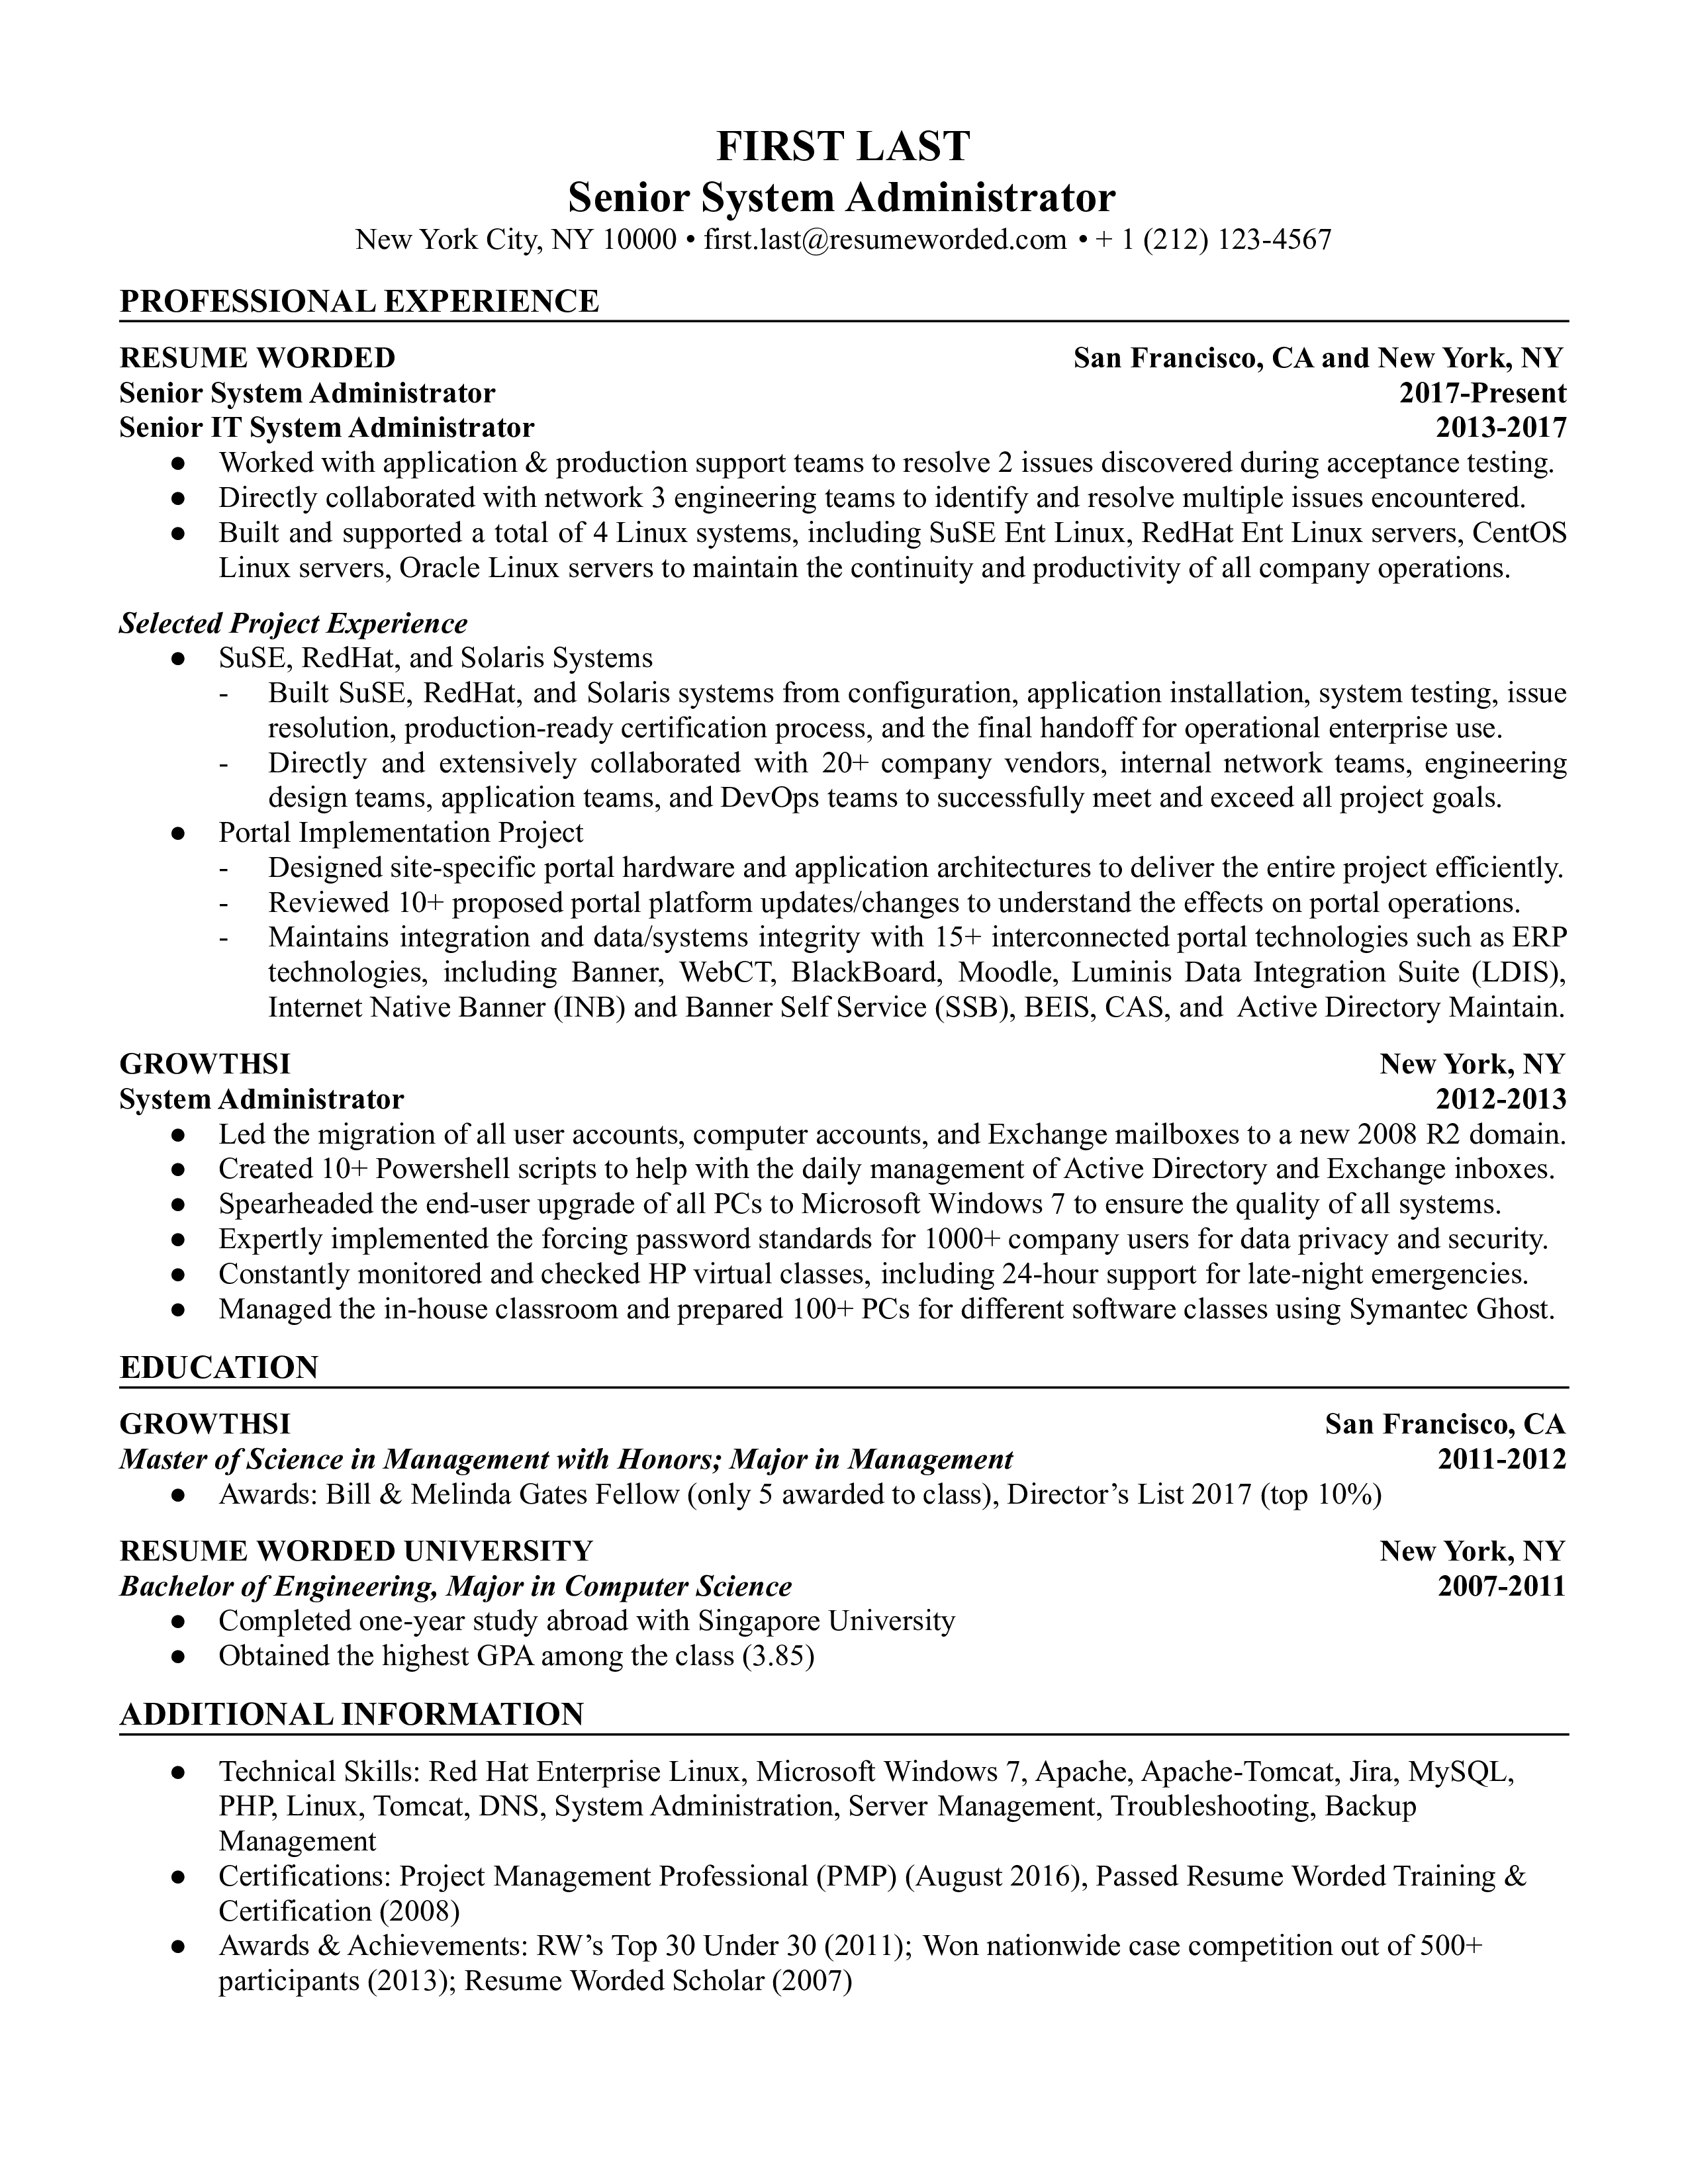 Senior System Administrator Resume Template + Example